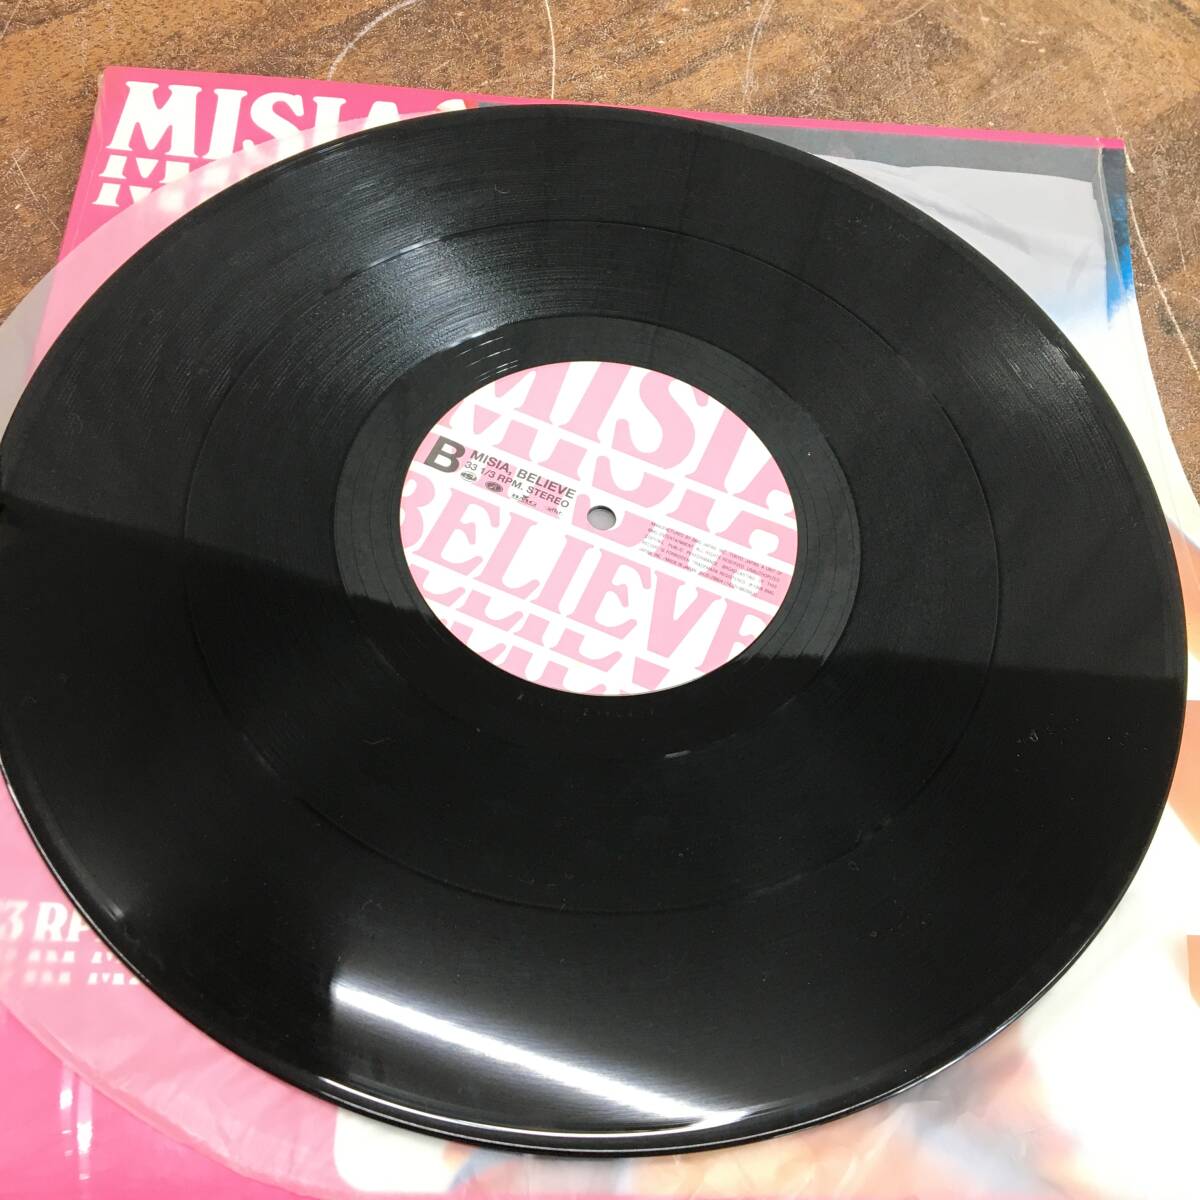 Misia ミーシャ Believe ビリーブ LP レコード BMG(BVJS-29904) ポップス 現状販売品 24c菊の画像4